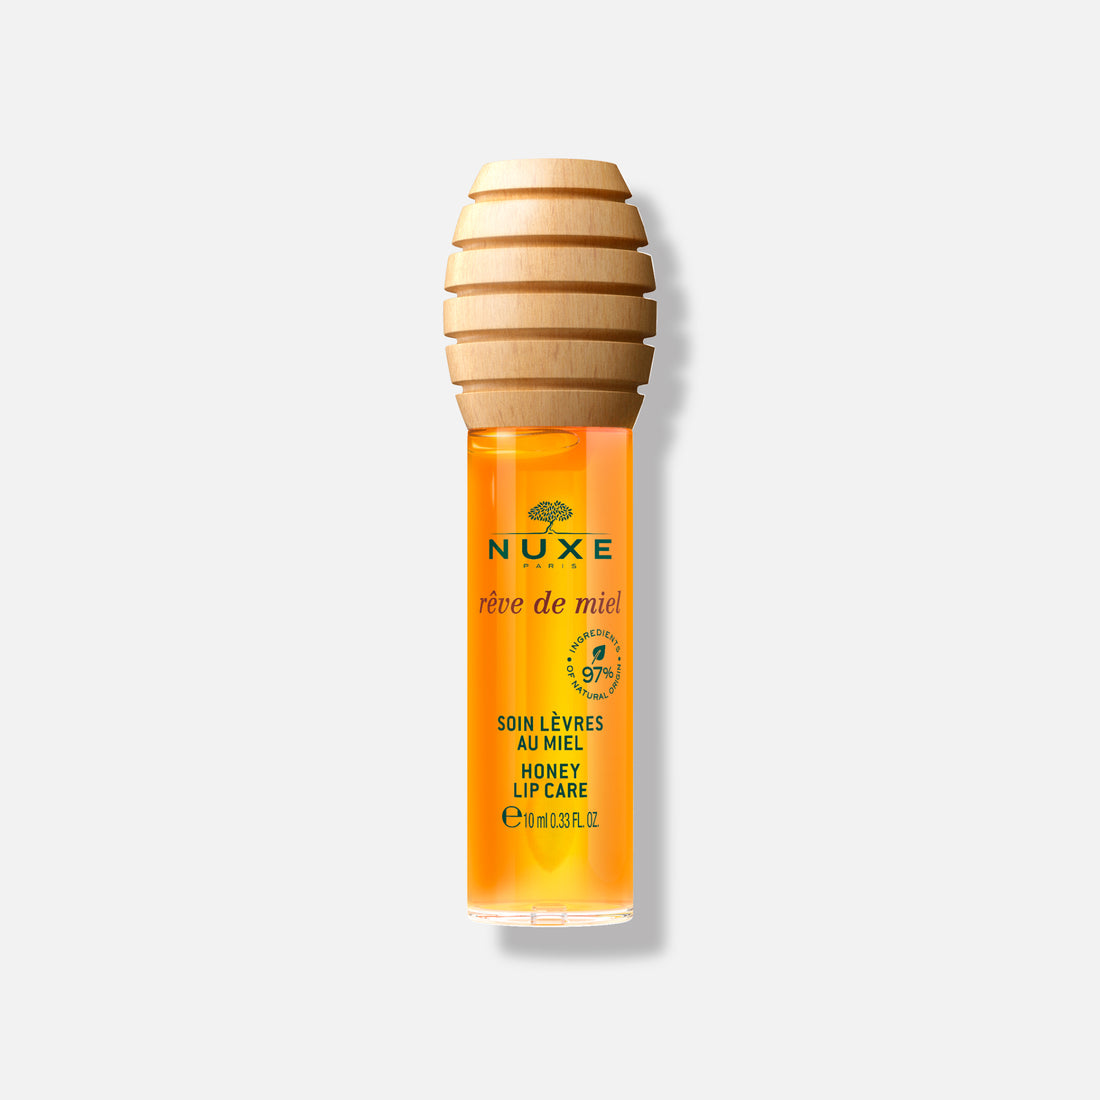 Nuxe - Rêve de Miel ® Honey Lip Care - 10 ml - ebeauty